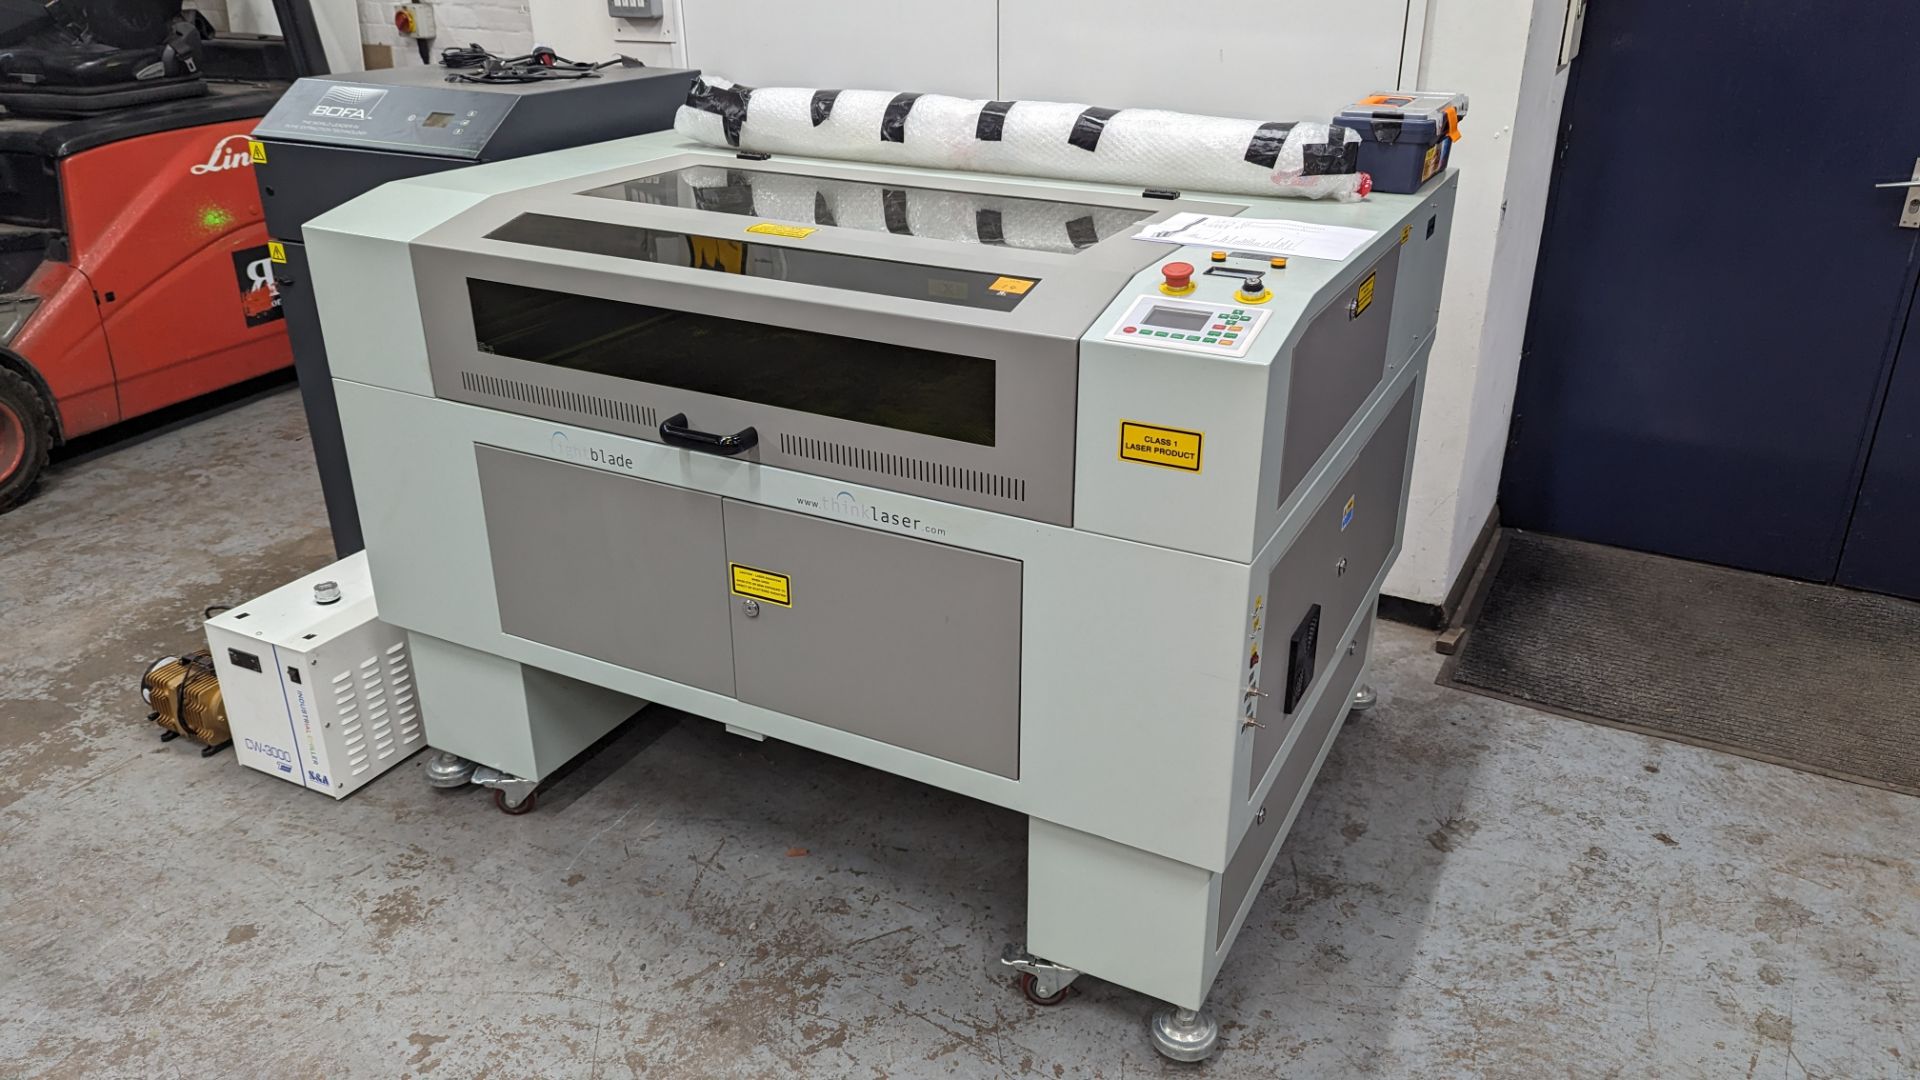 2021 Thinklaser Lightblade 6090 laser engraving machine including dedicated extraction system. - Image 5 of 49